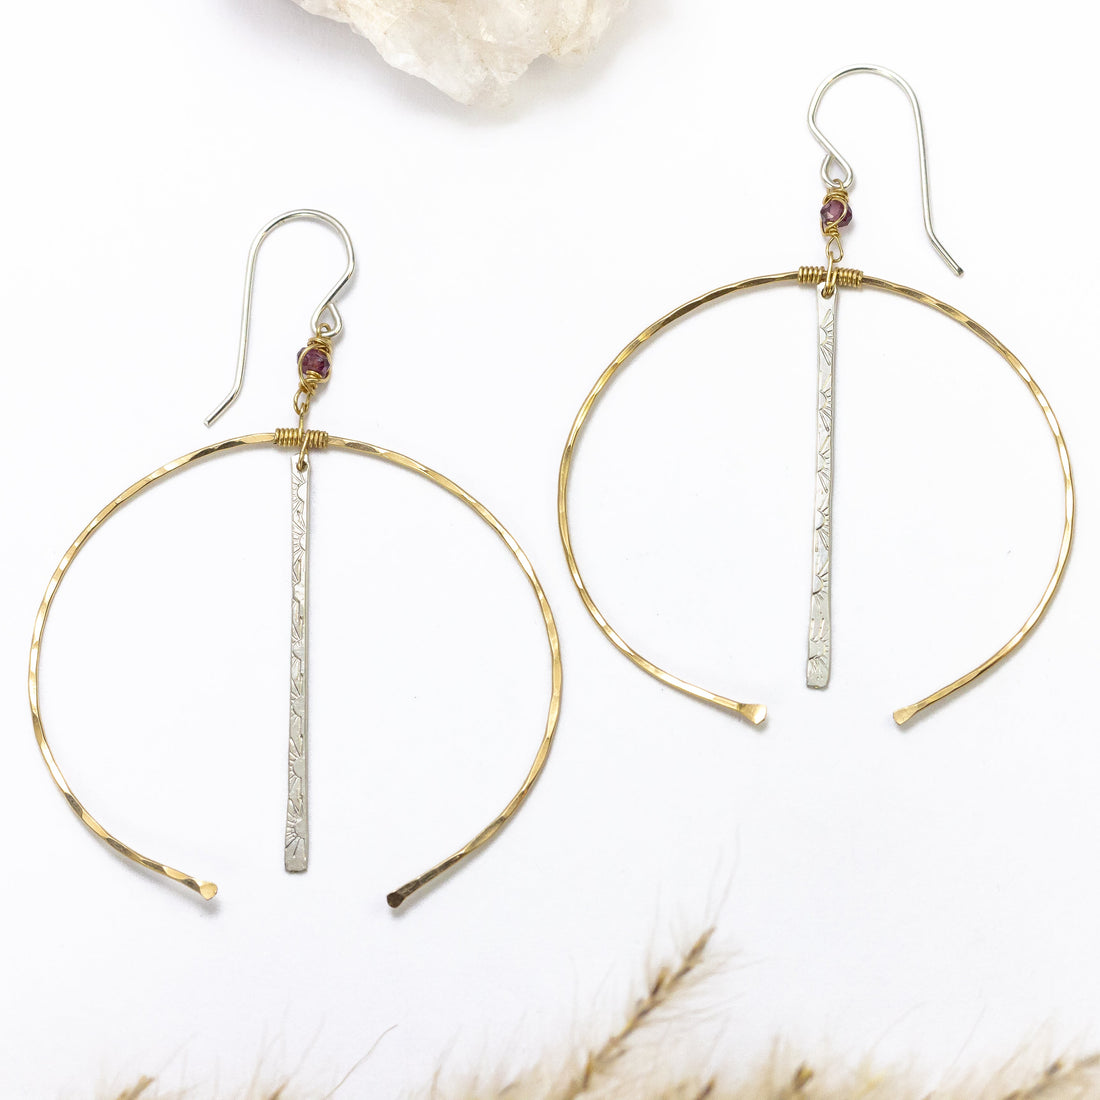 handmade large mixed metal statement earrings laura j designs